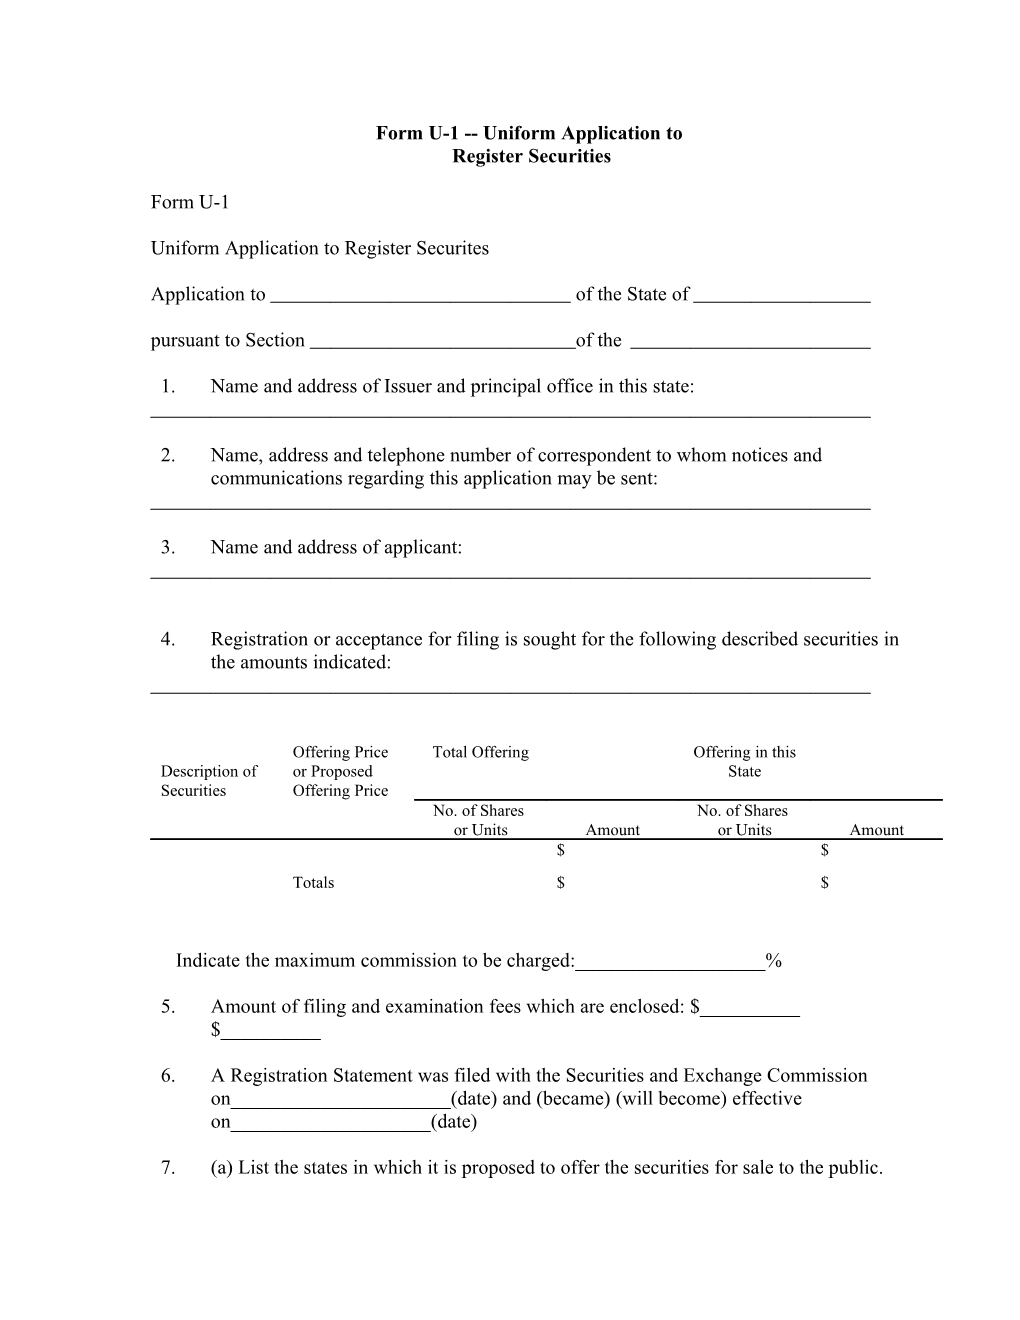 Form U-1 Uniform Application To